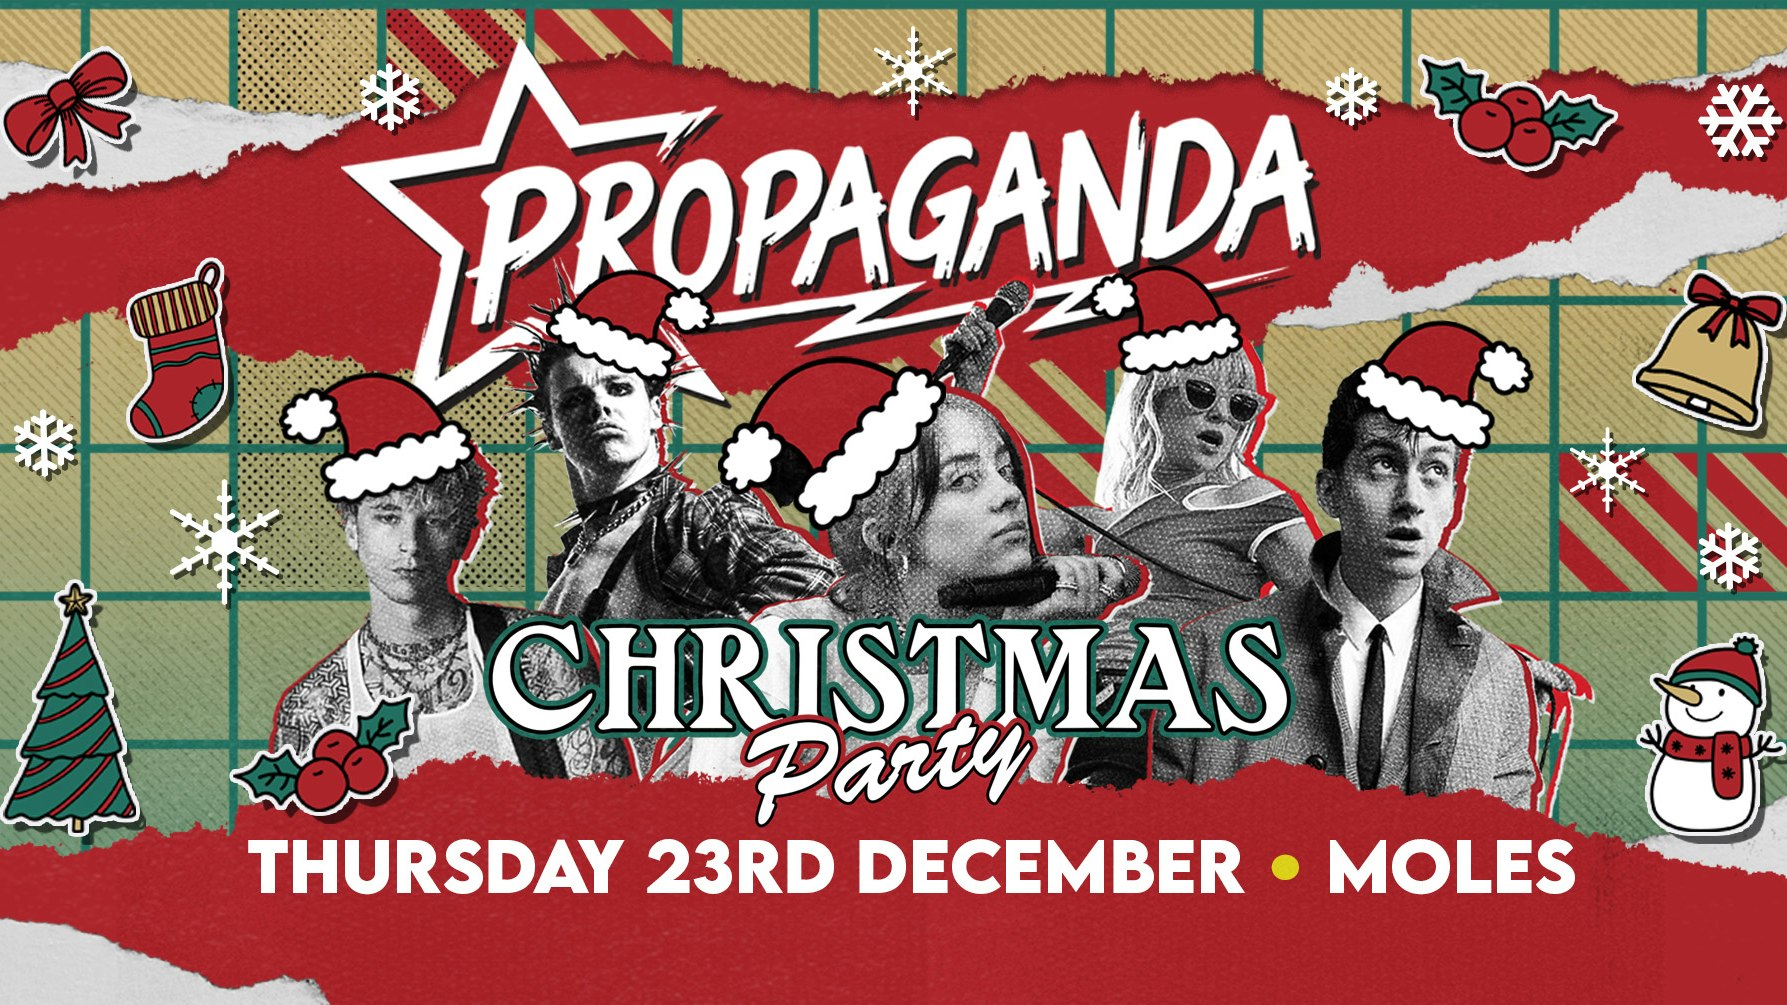 Propaganda Bath – Christmas Party!